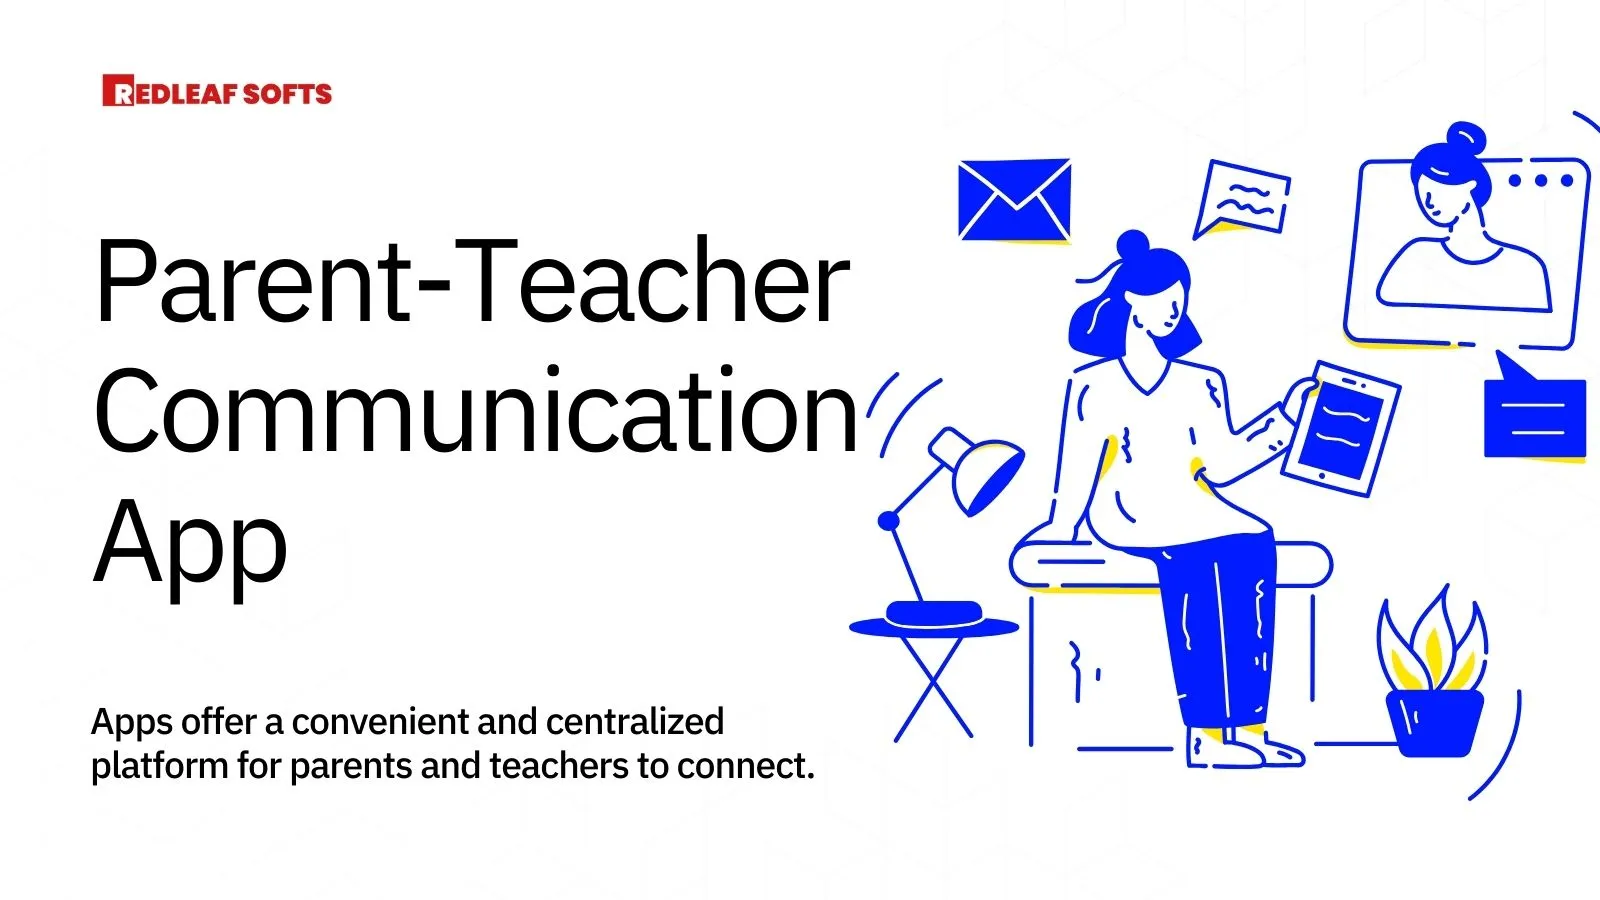 Parent-Teacher Communication Apps: Bridging the Gap